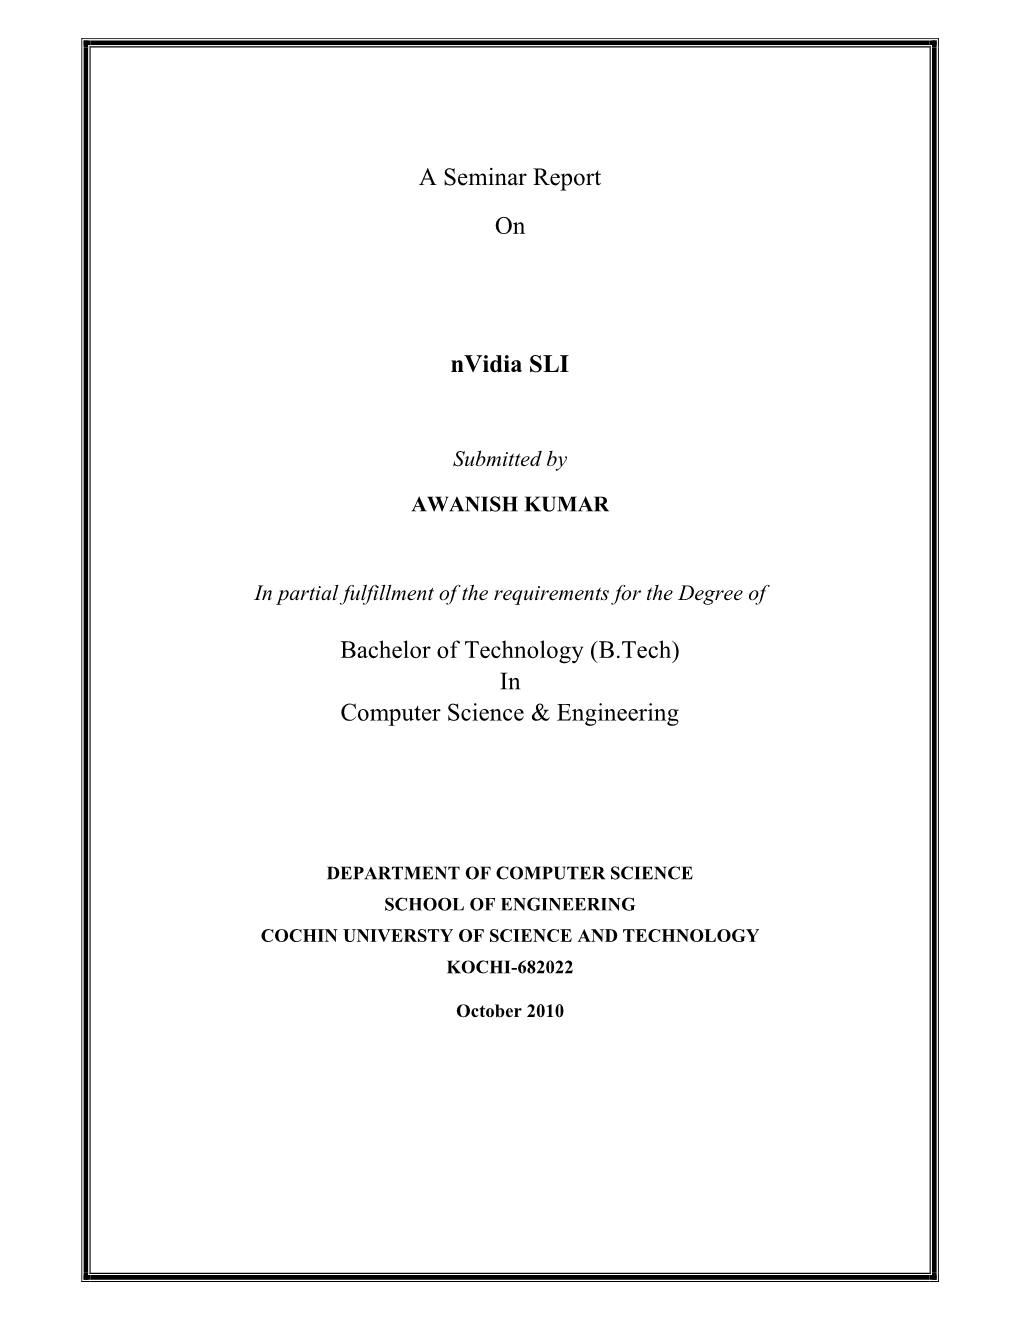 A Seminar Report on Nvidia SLI Bachelor of Technology